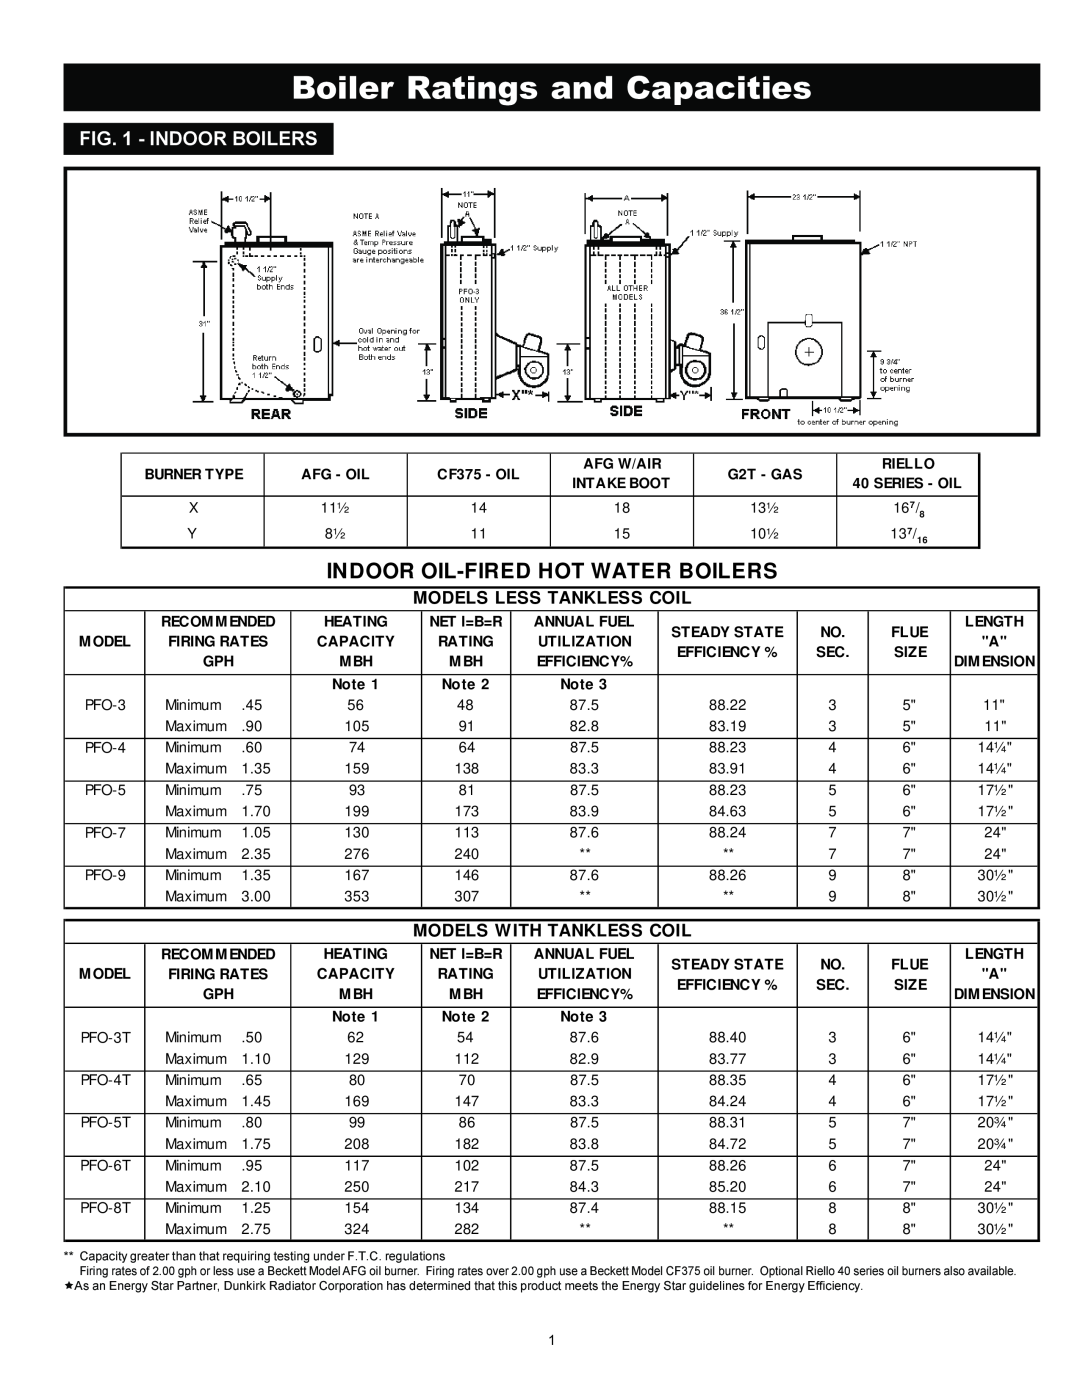 Ultimate Products PF Series manual Boiler Ratings and Capacities, Indoor Oil-Firedhot Water Boilers, Indoor Boilers 